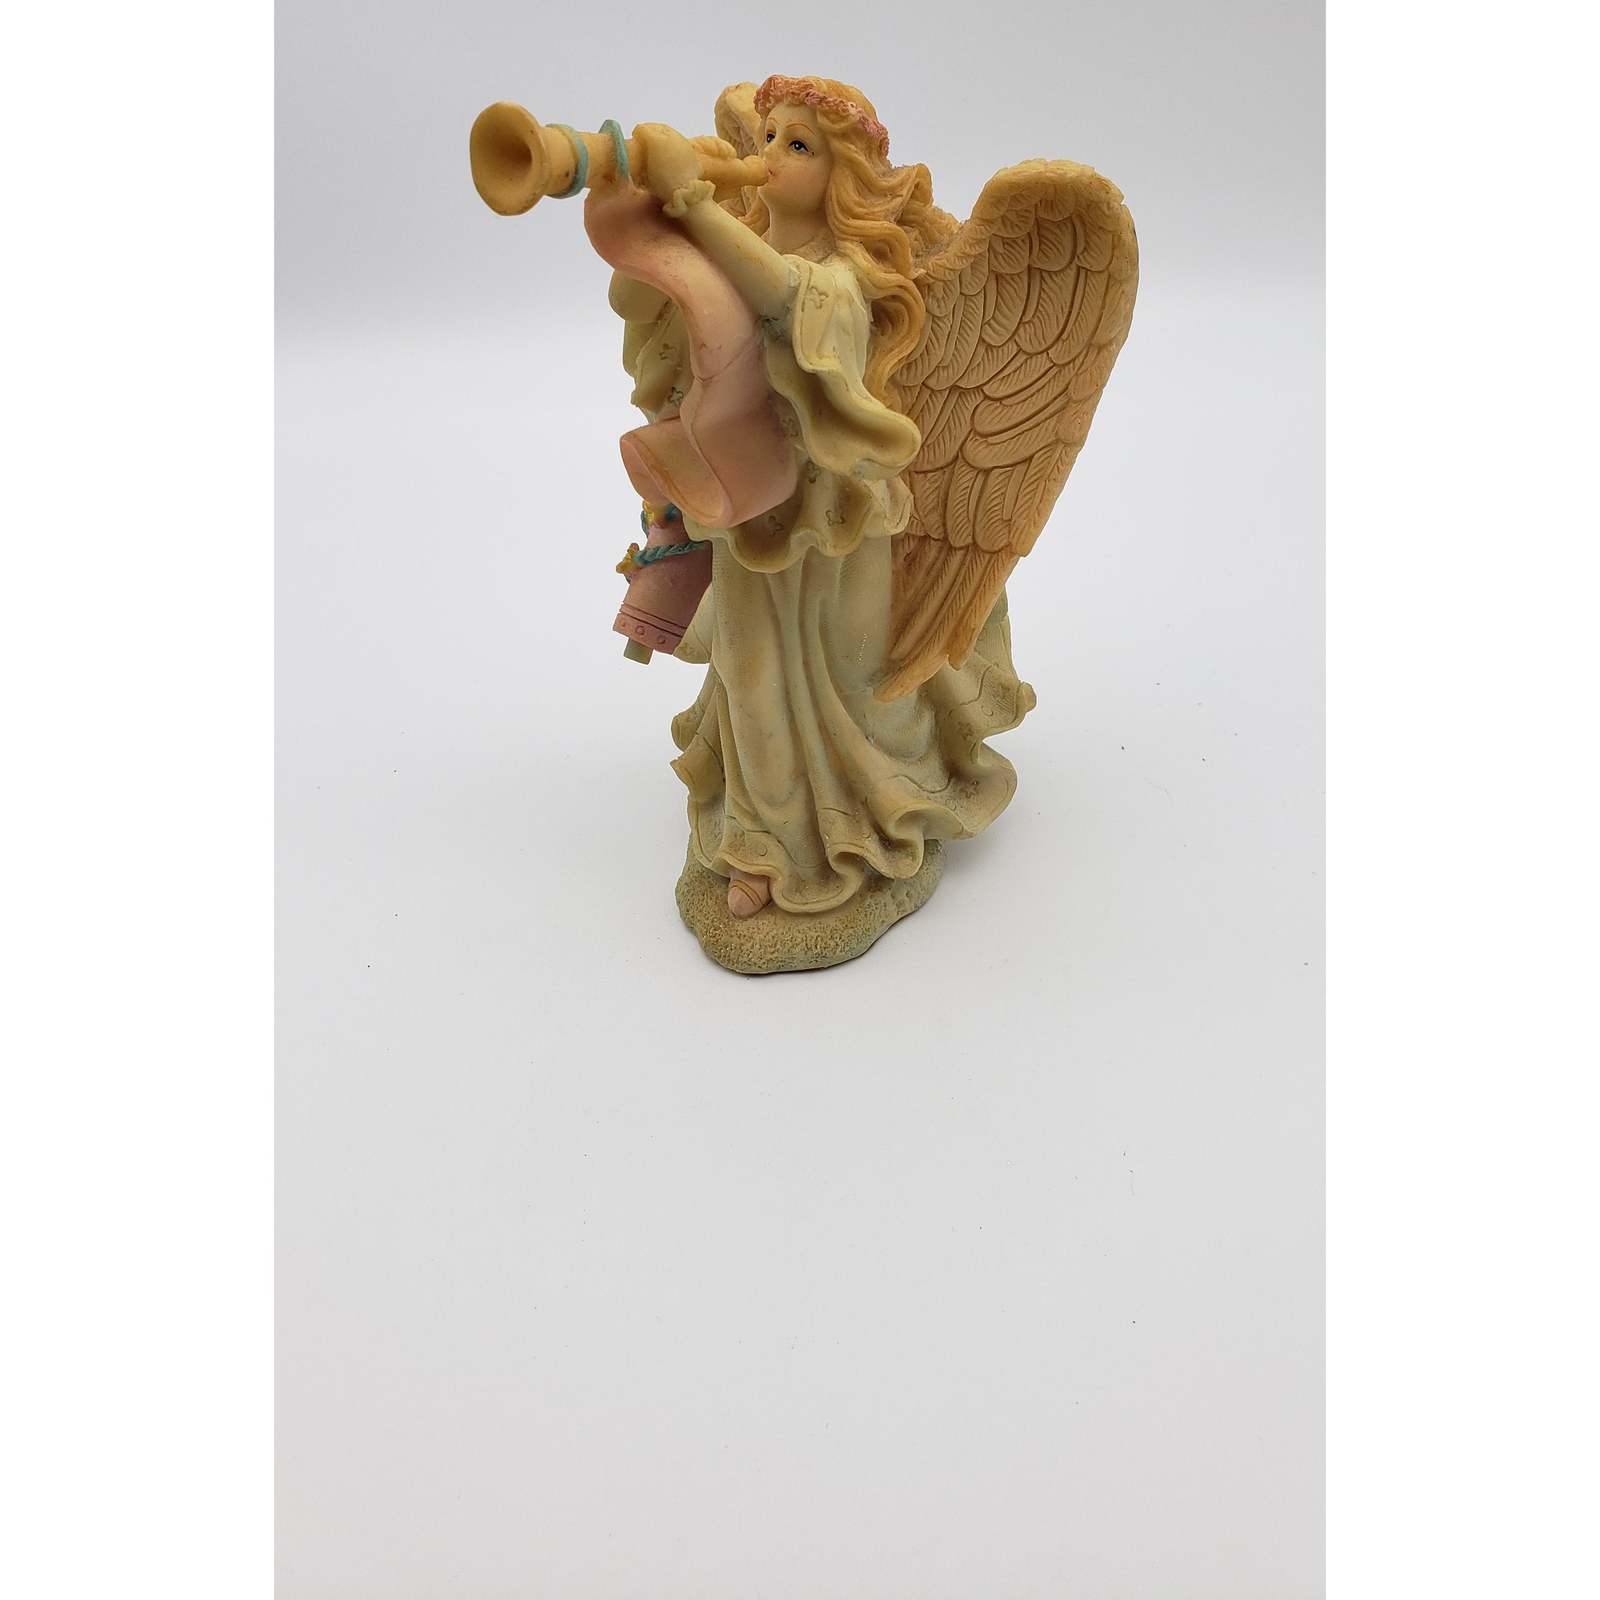 7in Resin Angel, Herald Trumpeter Figurine - $15.00